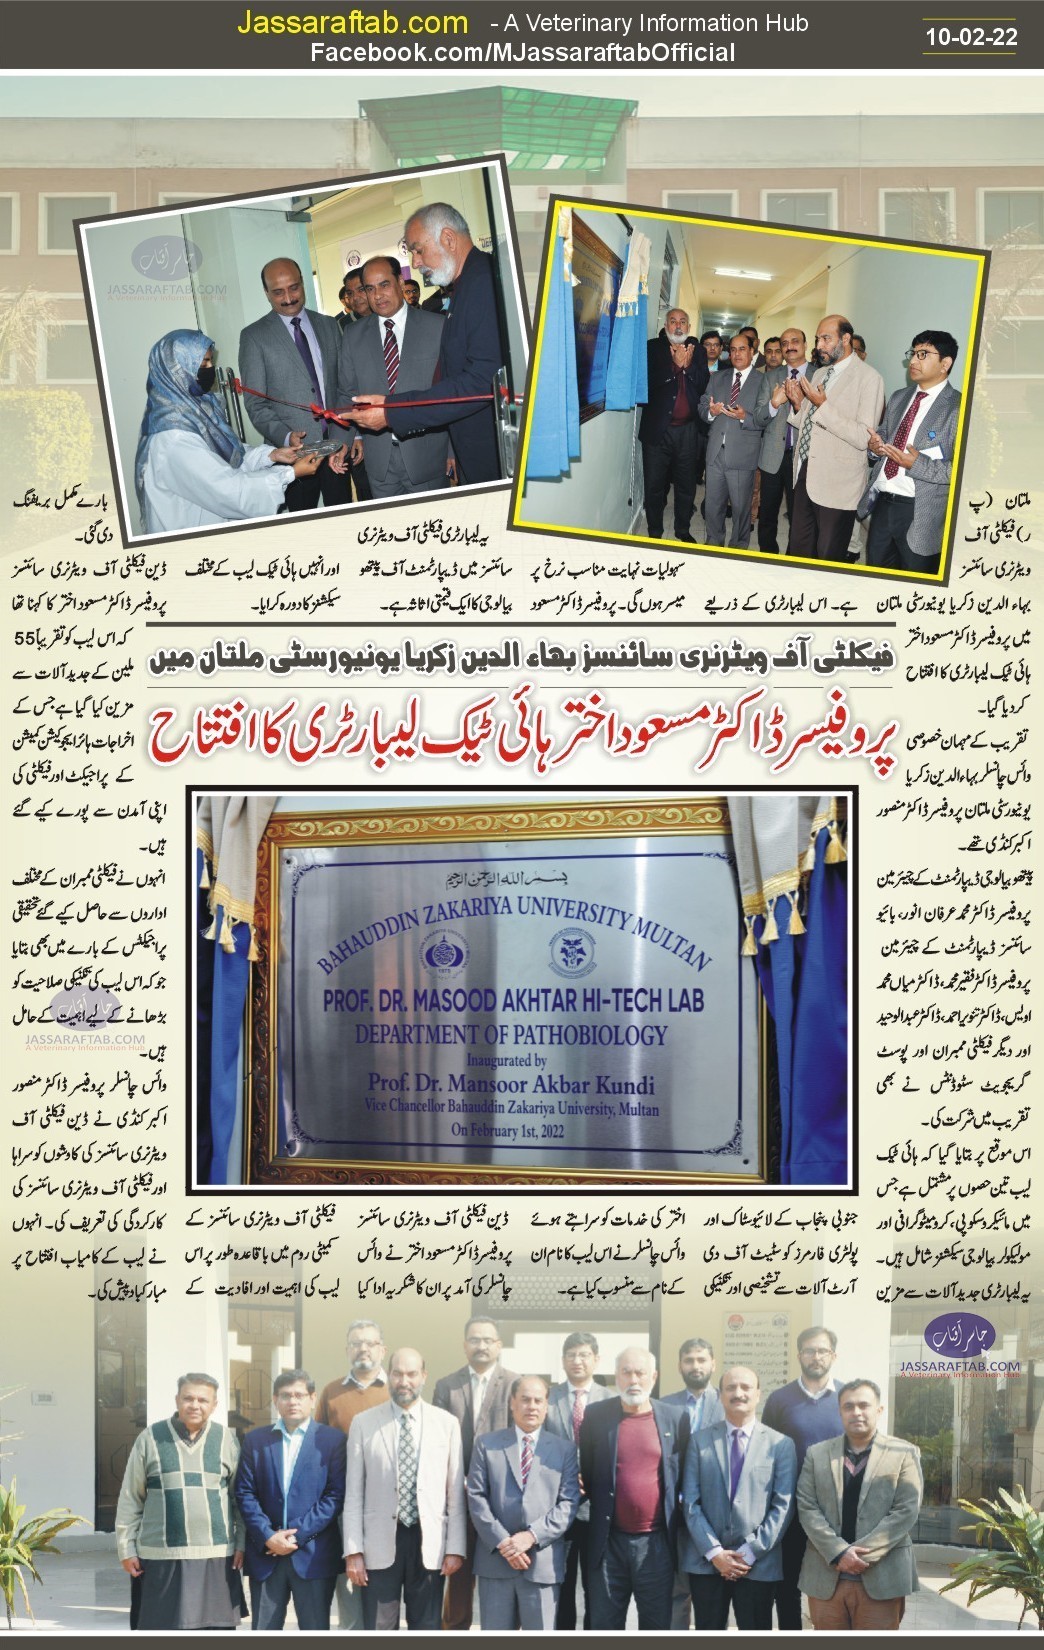 Prof. Dr. Masood Akthar Hi-Tech lab inaugurated at BZU Multan